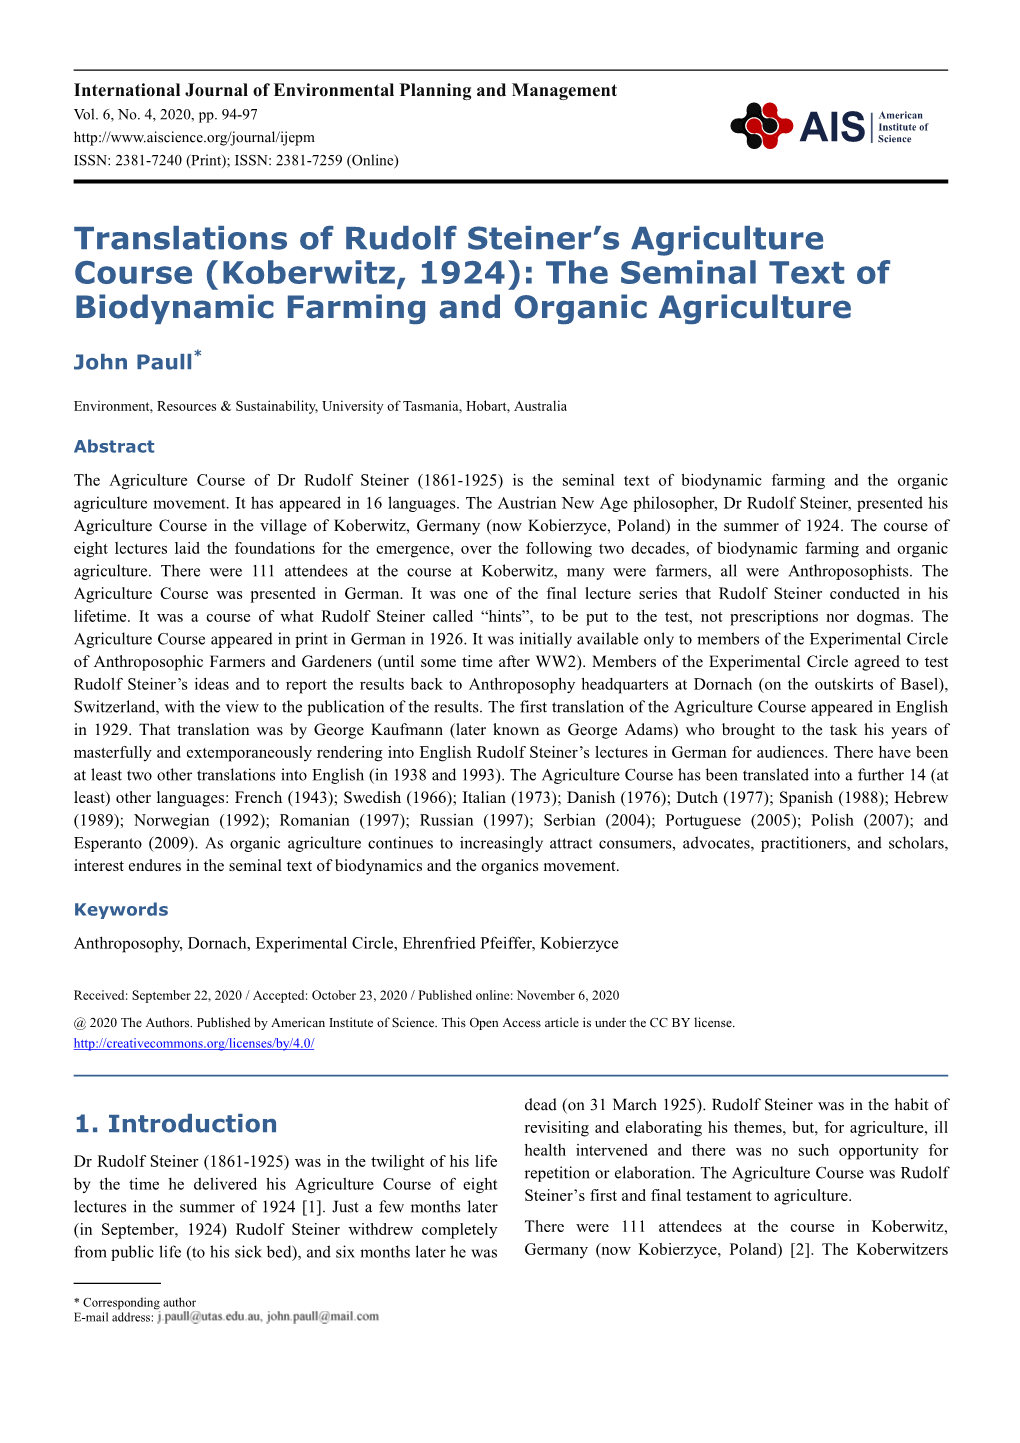 Translations of Rudolf Steiner's Agriculture Course (Koberwitz